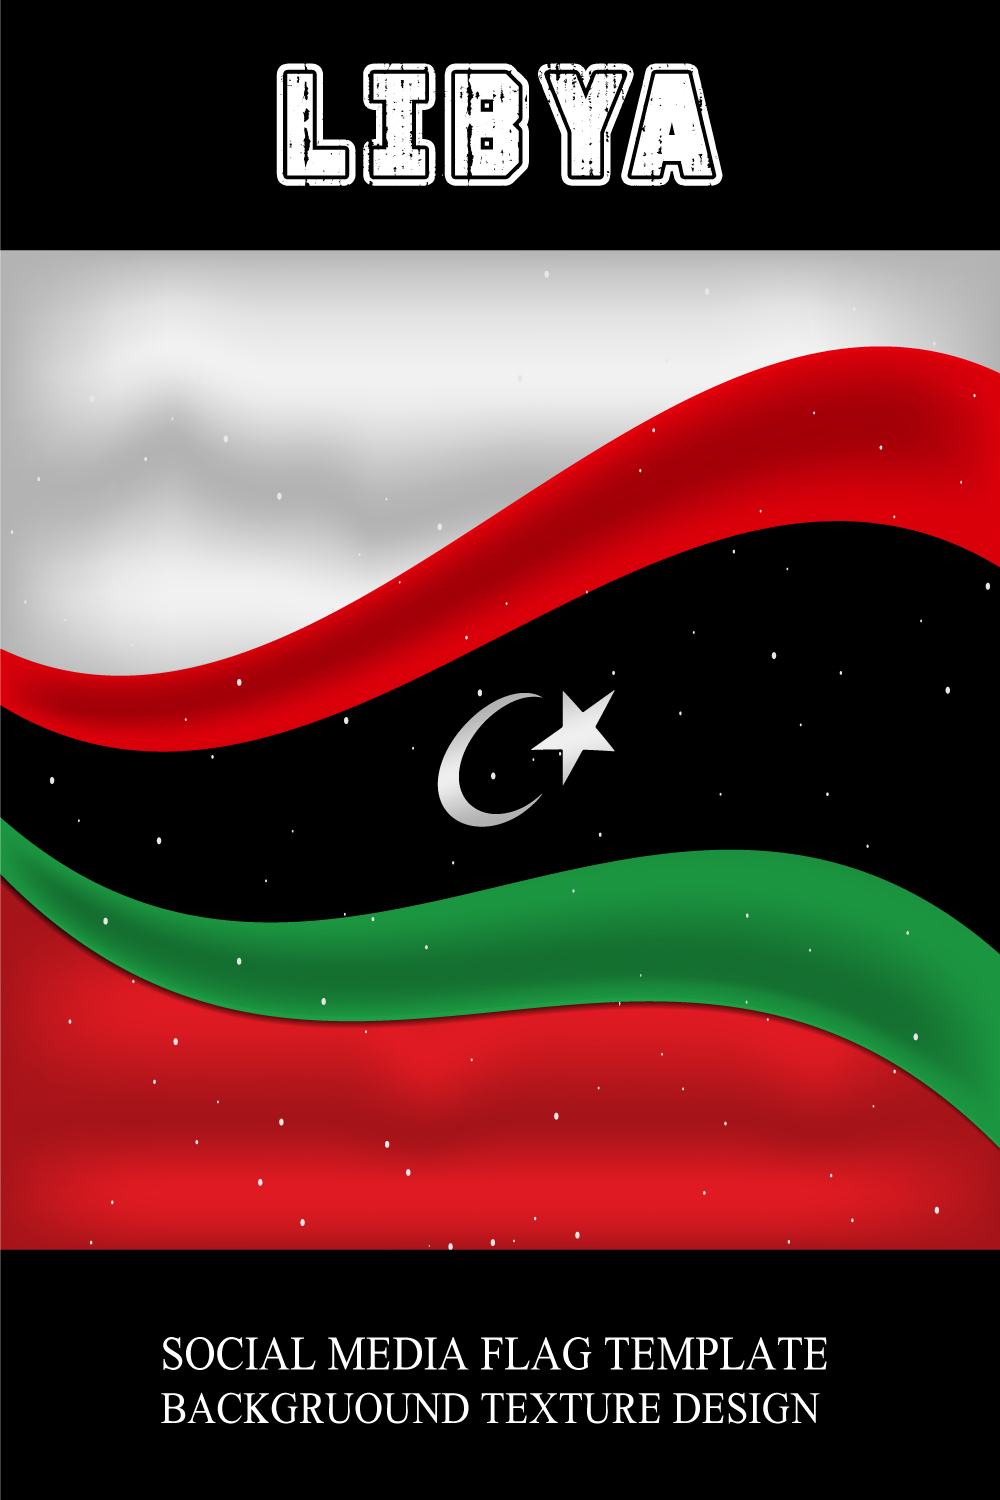 Charming image of the flag of Libya.